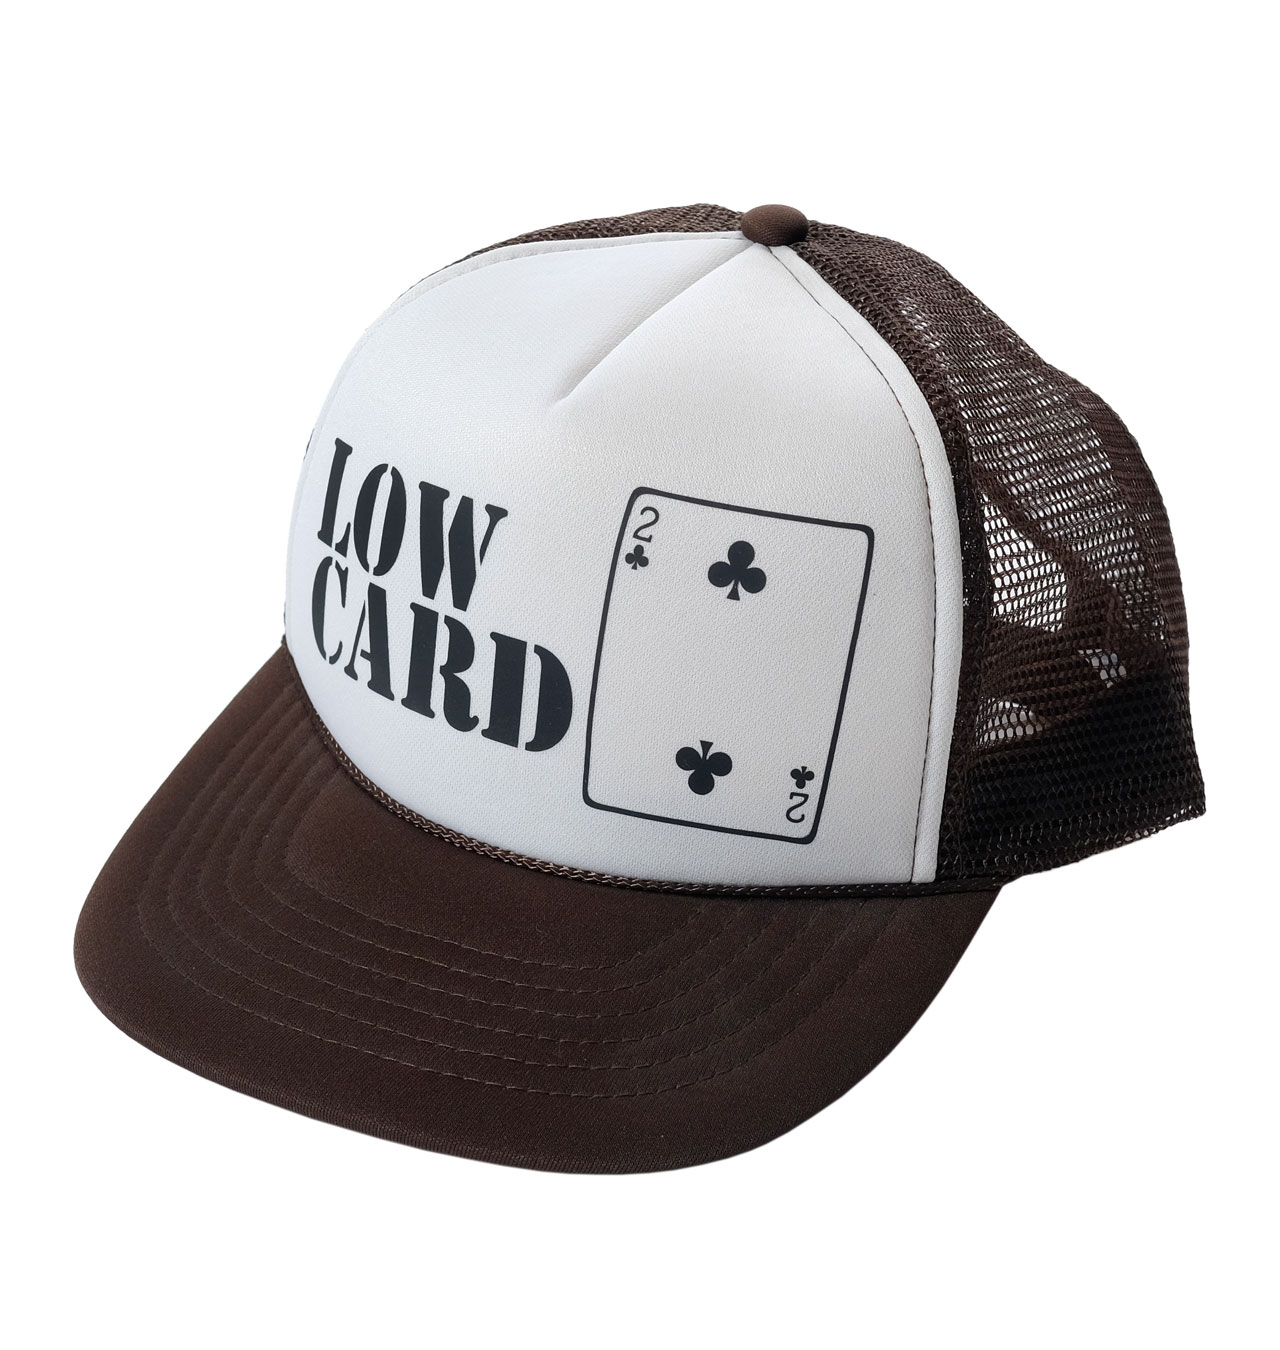 Lowcard---Original-Logo-Trucker-Cap---Brown-White